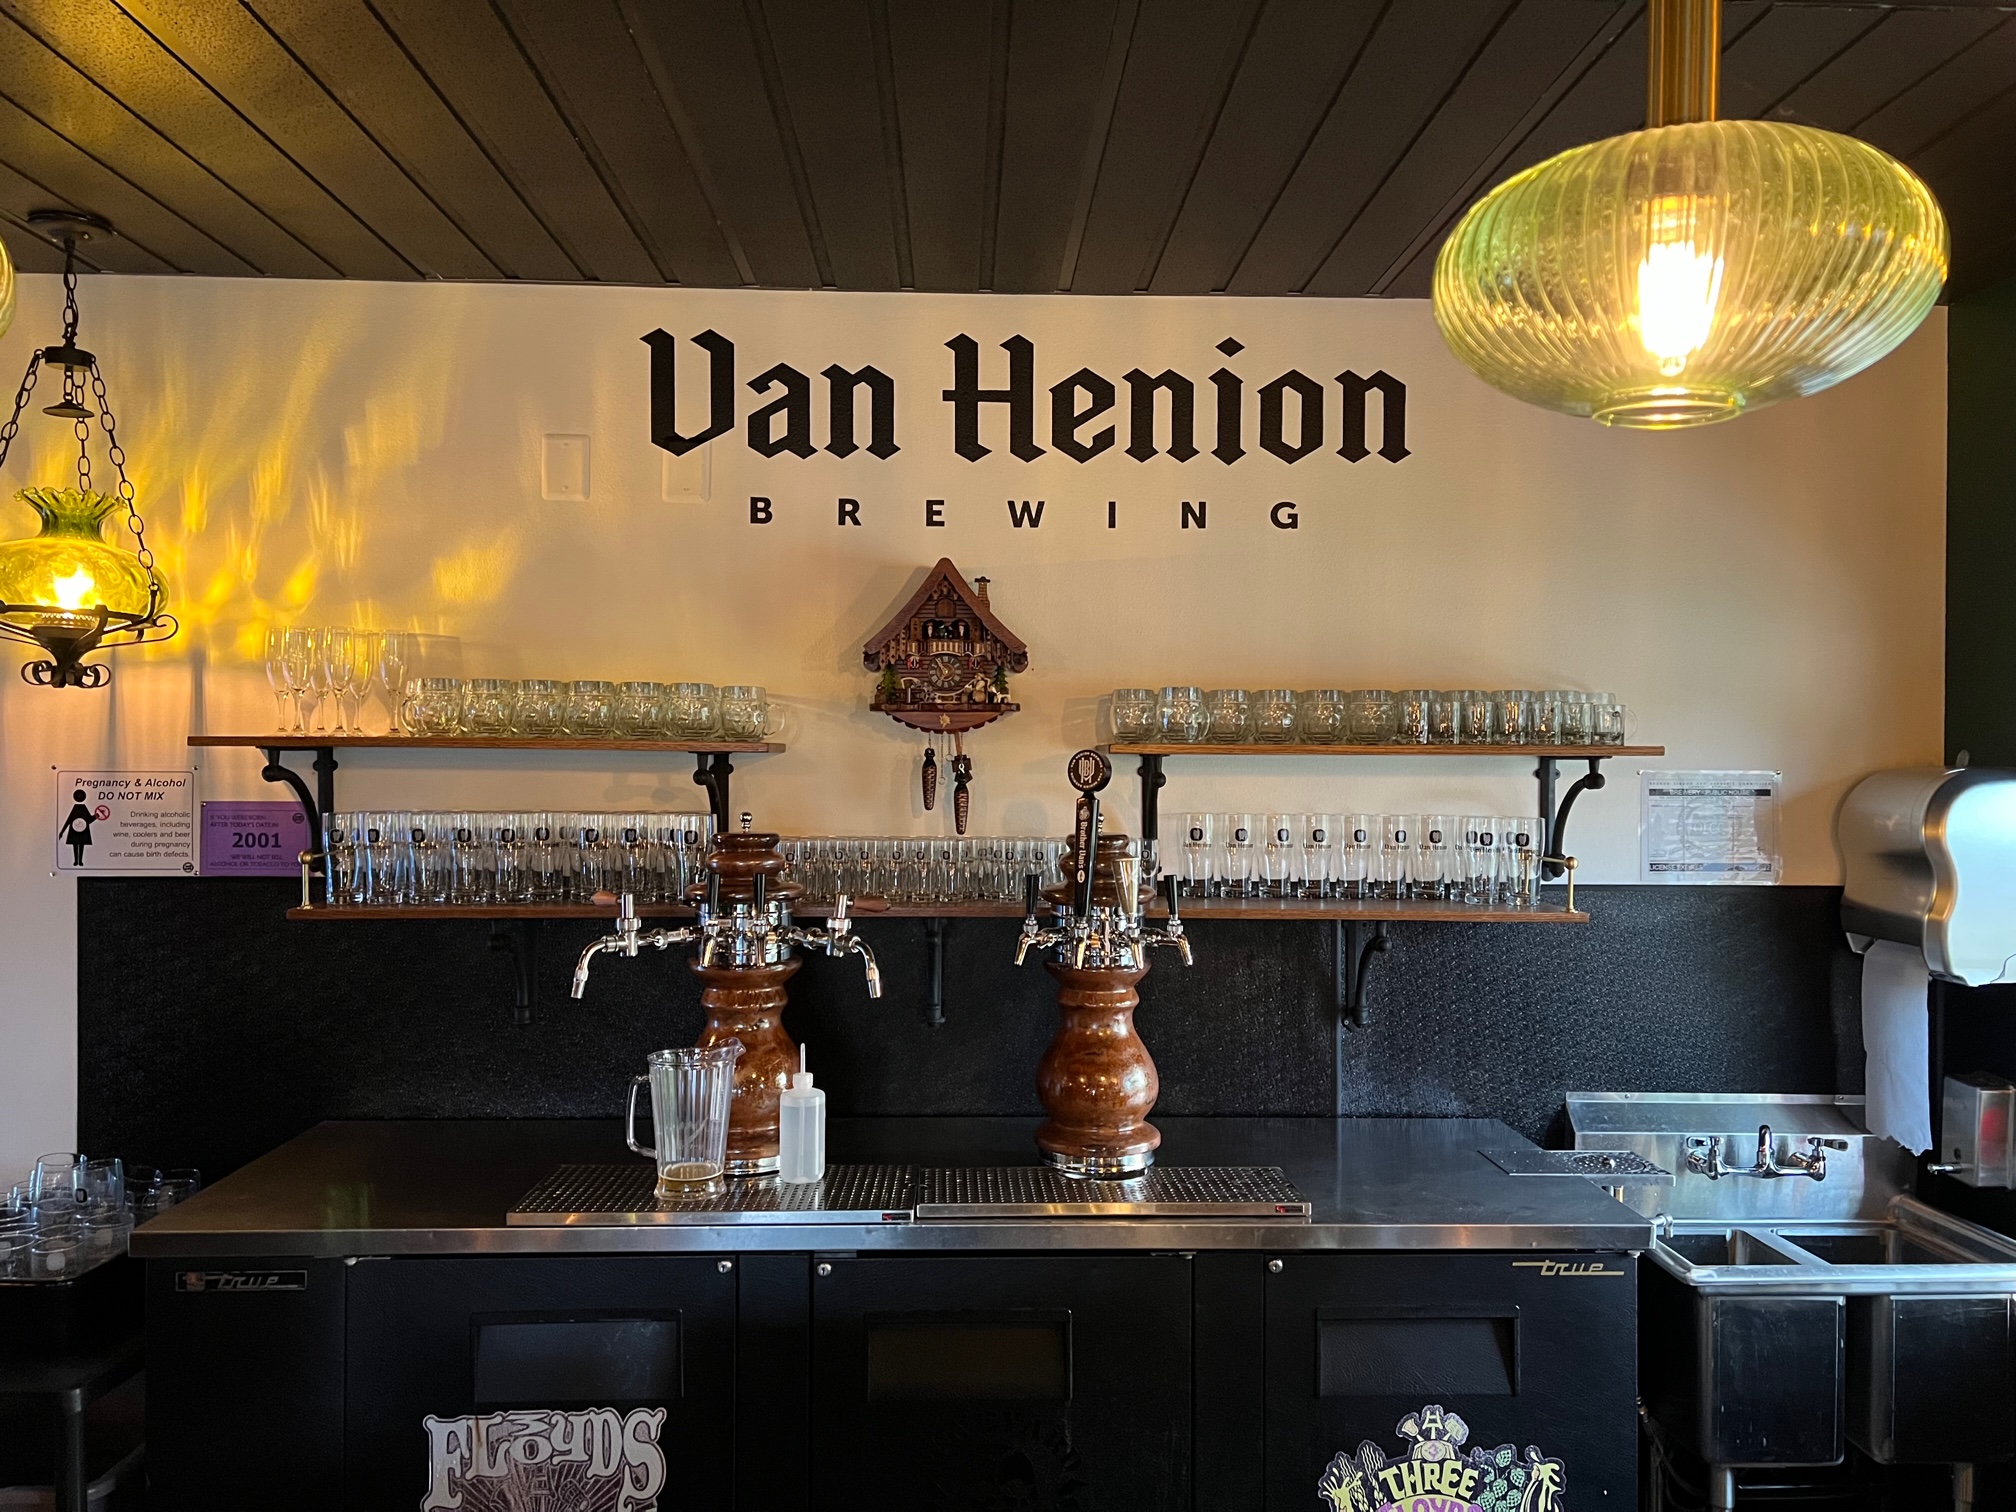 Van Henion Brewing is a great new brewery on Bend's eastside.